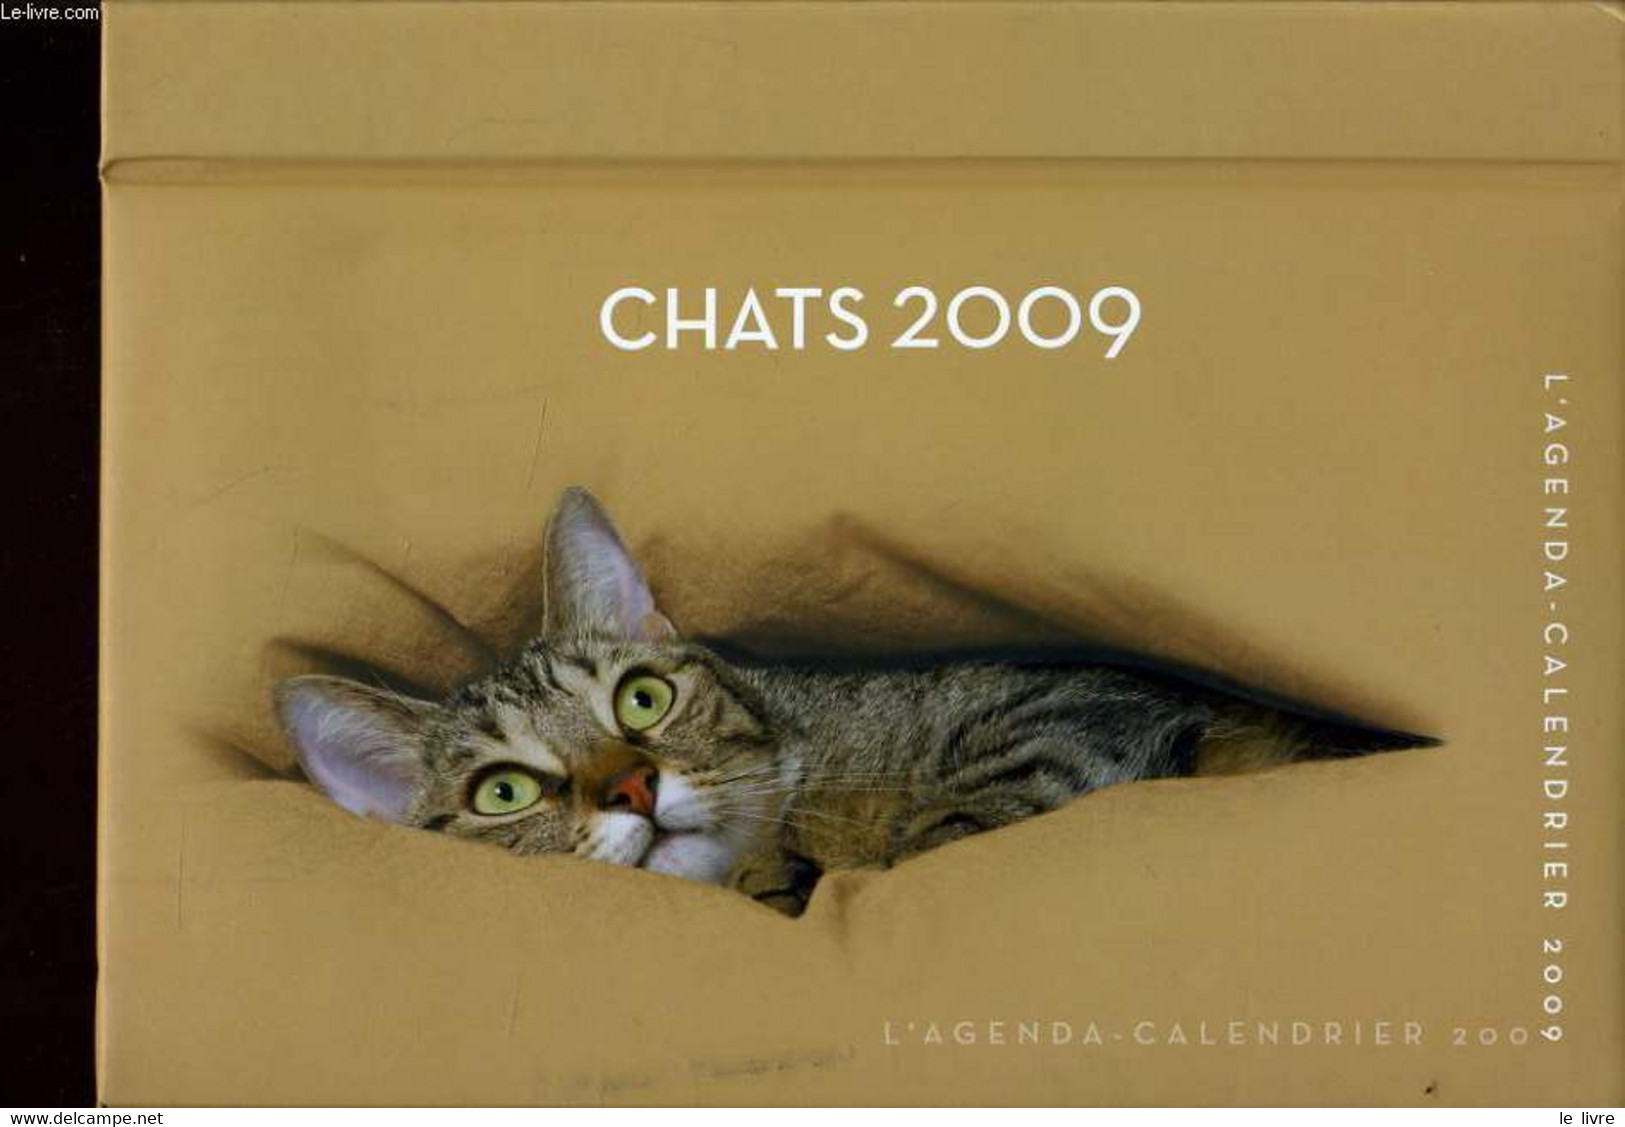 L'AGENDA CALENDRIER CHATS 2009 - JACQUELINE LASRY - 2008 - Agendas & Calendarios